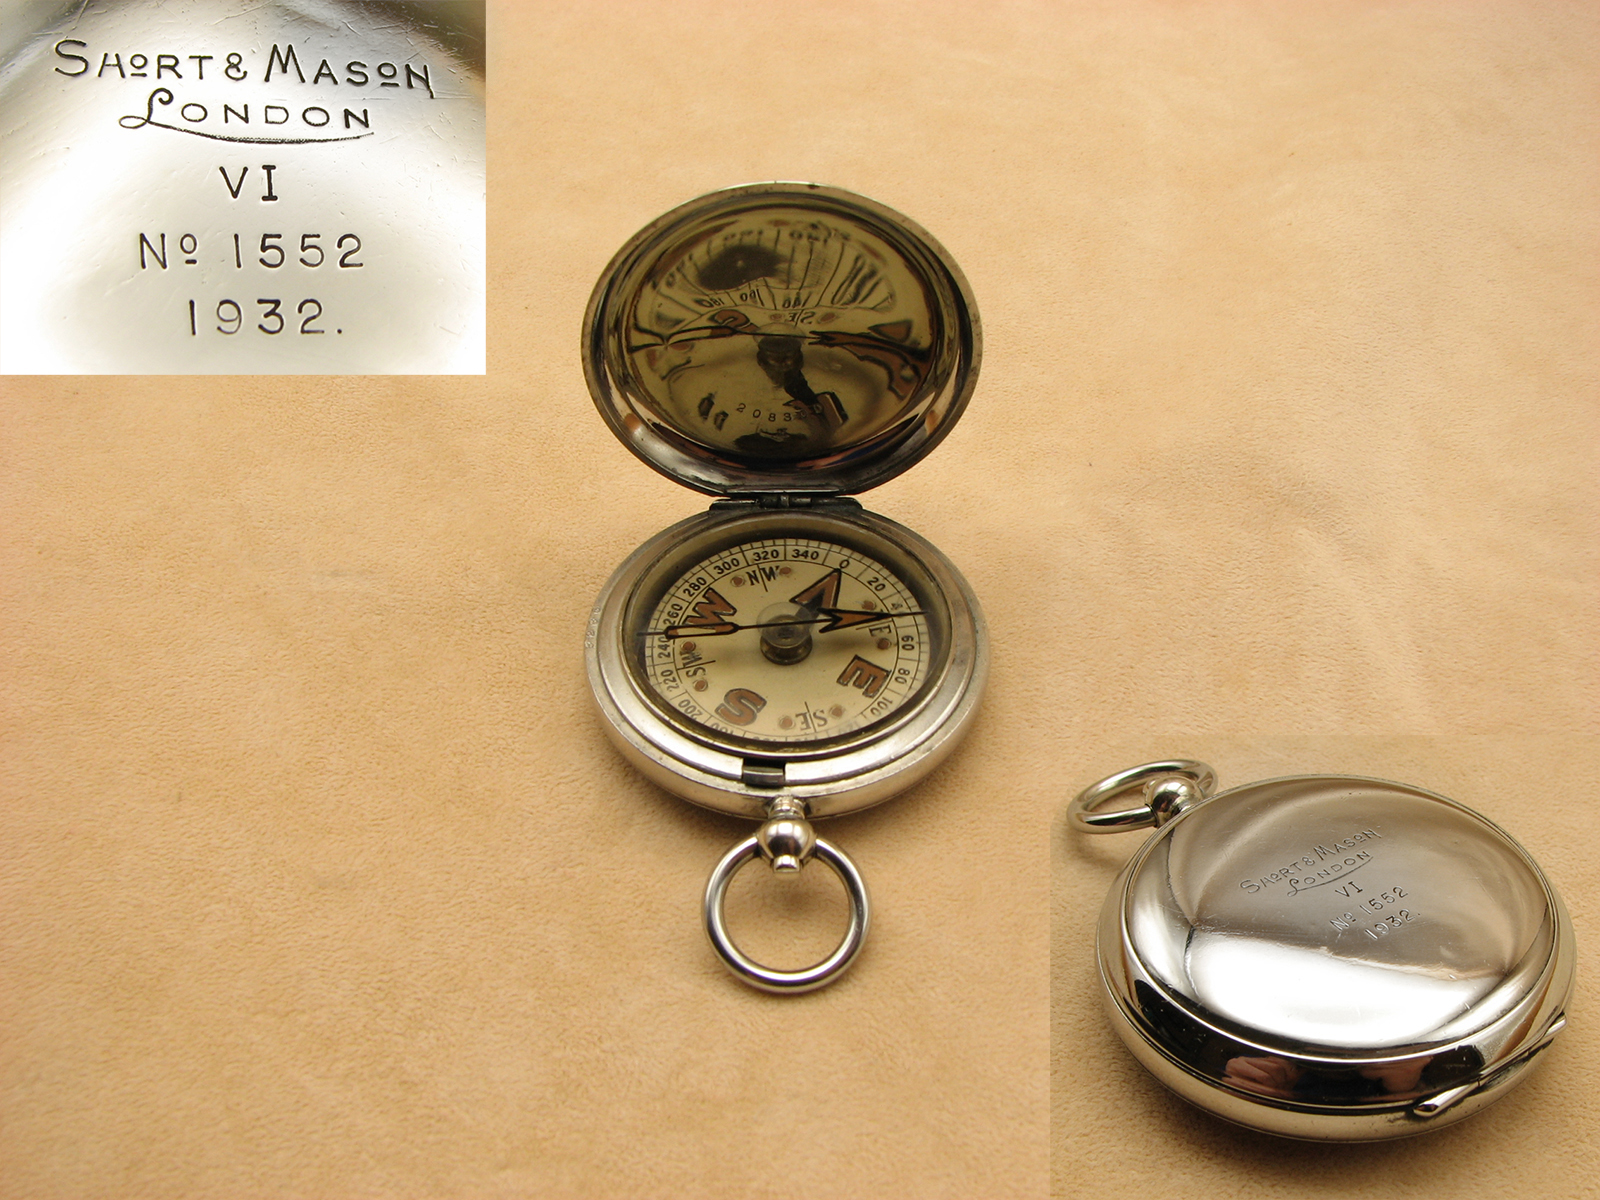 Short & Mason MK VI pocket compass dated 1932